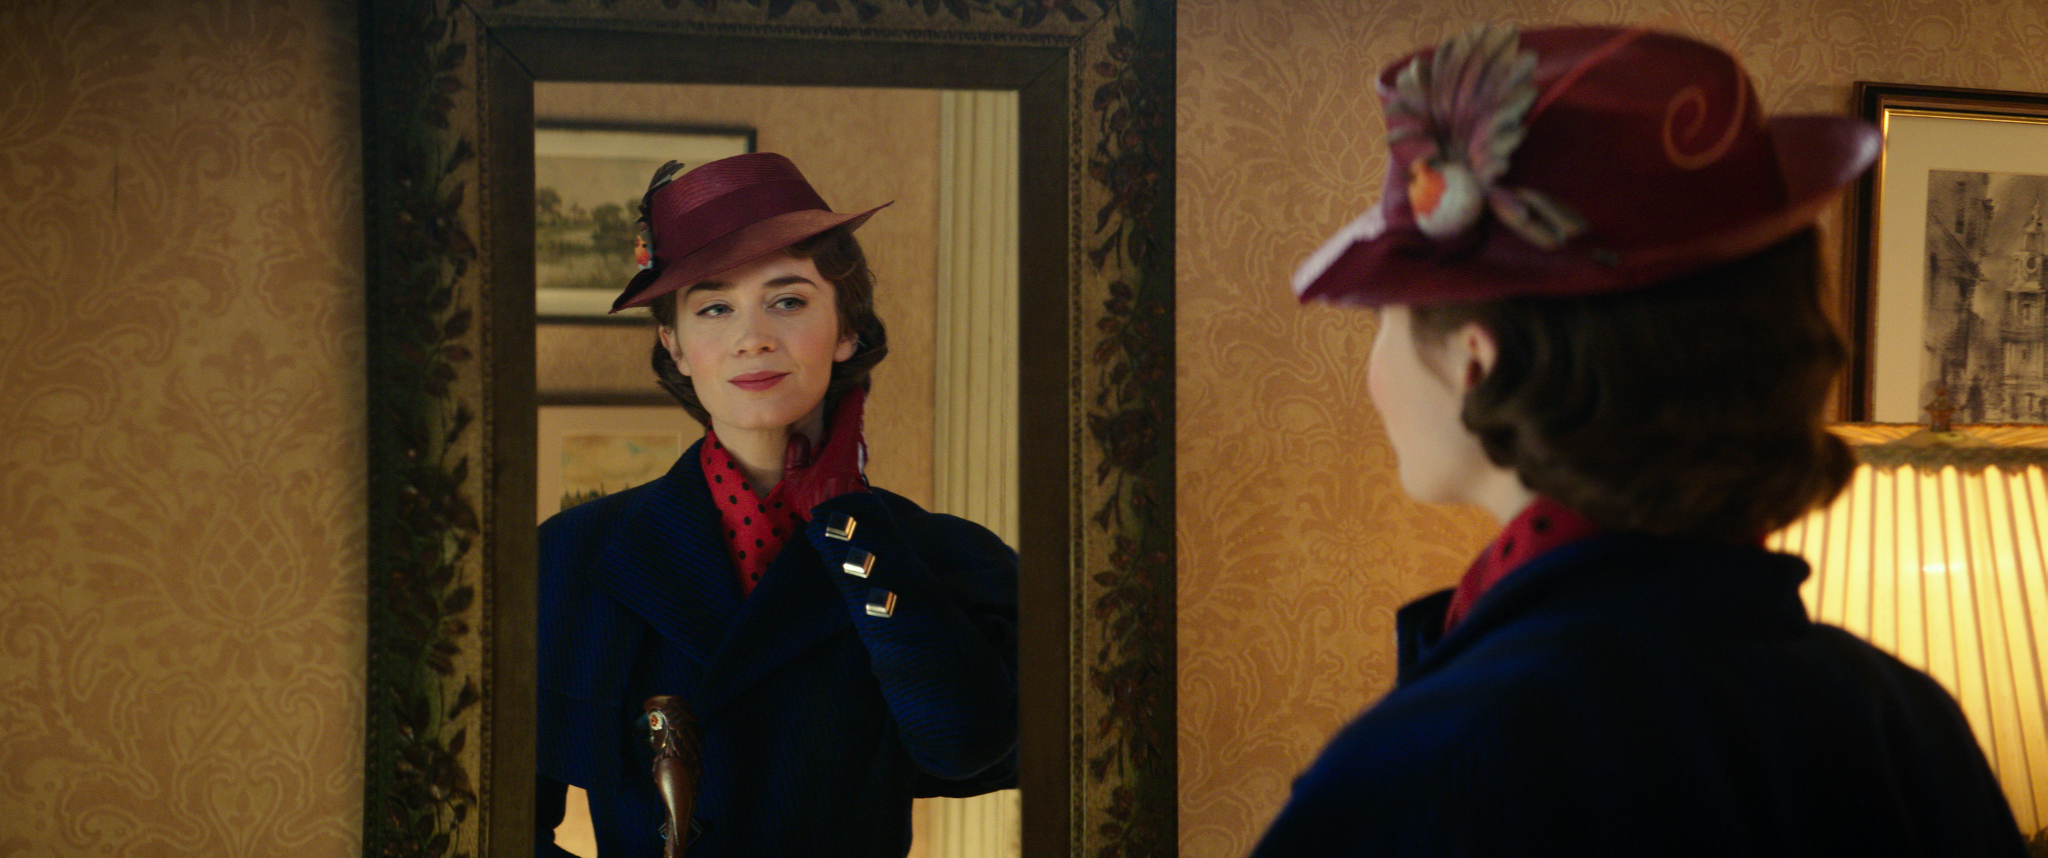 Disney Teases Magical Movie Mary Poppins Returns With Teaser Trailer